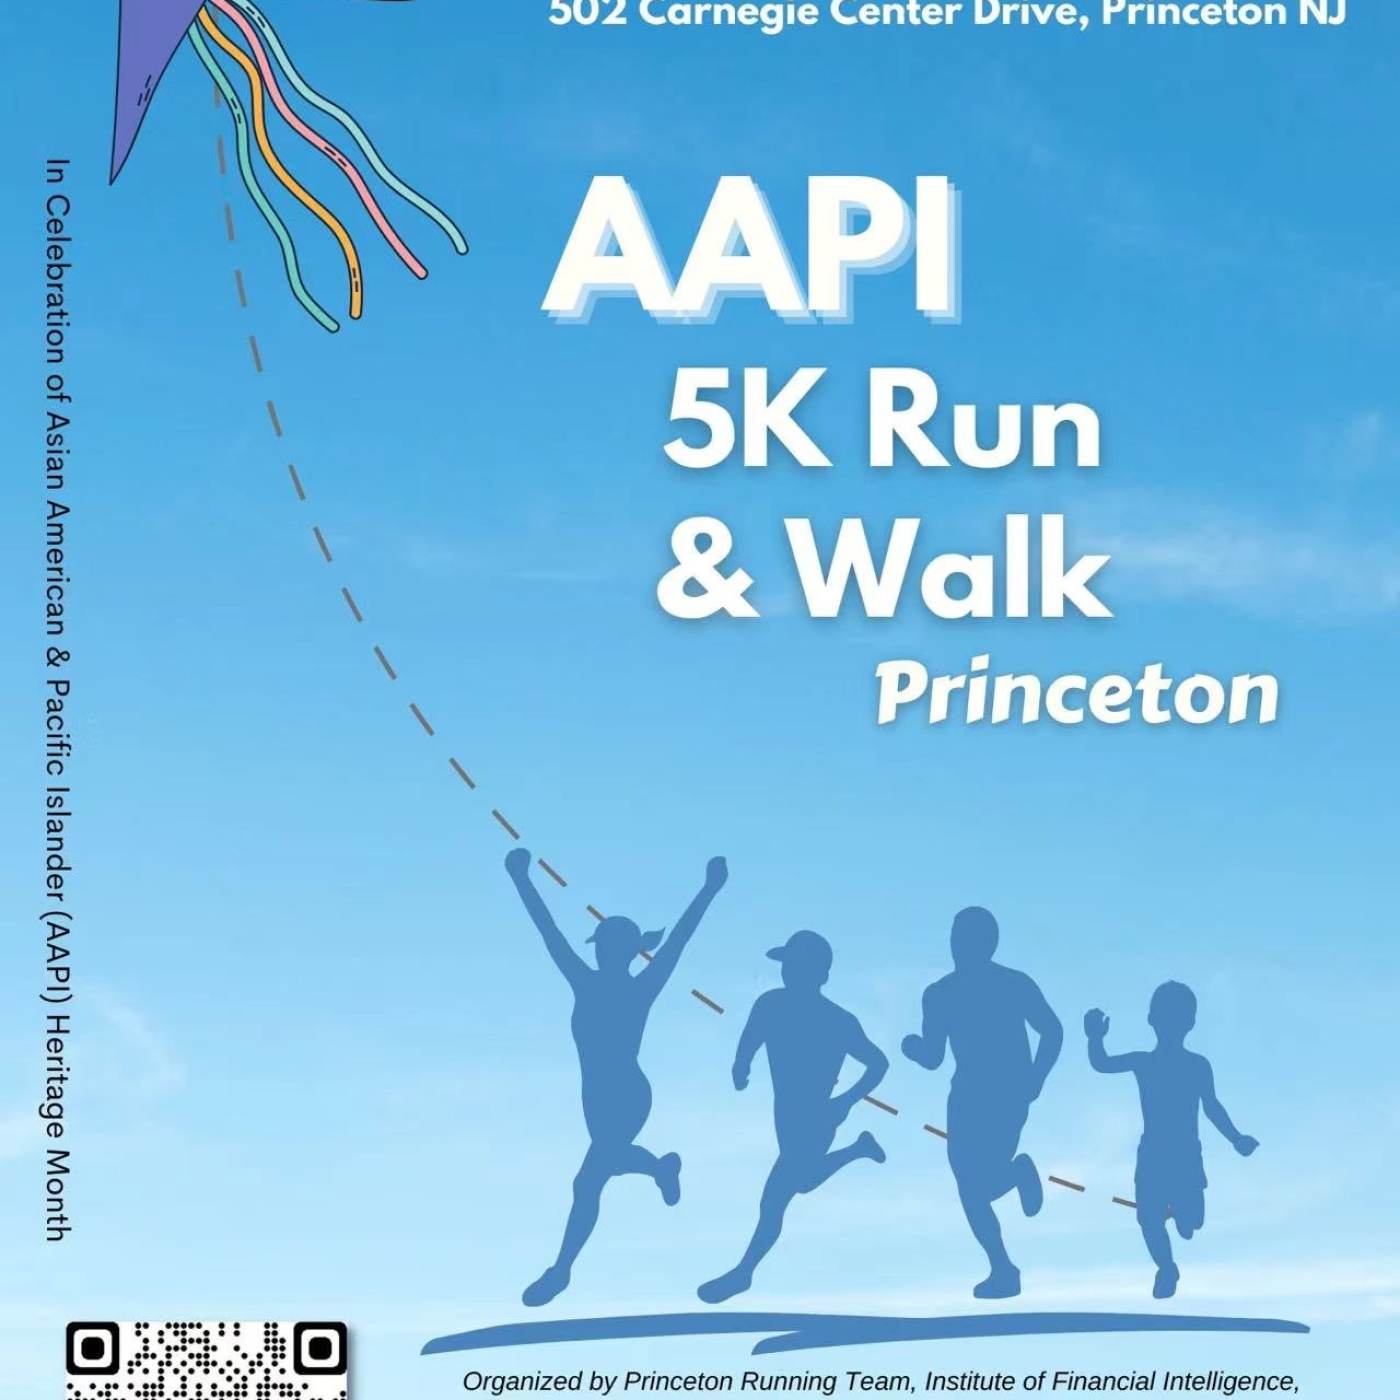 AAPI 5K Run & Walk Princeton Flyer, designed by Ming Kuang